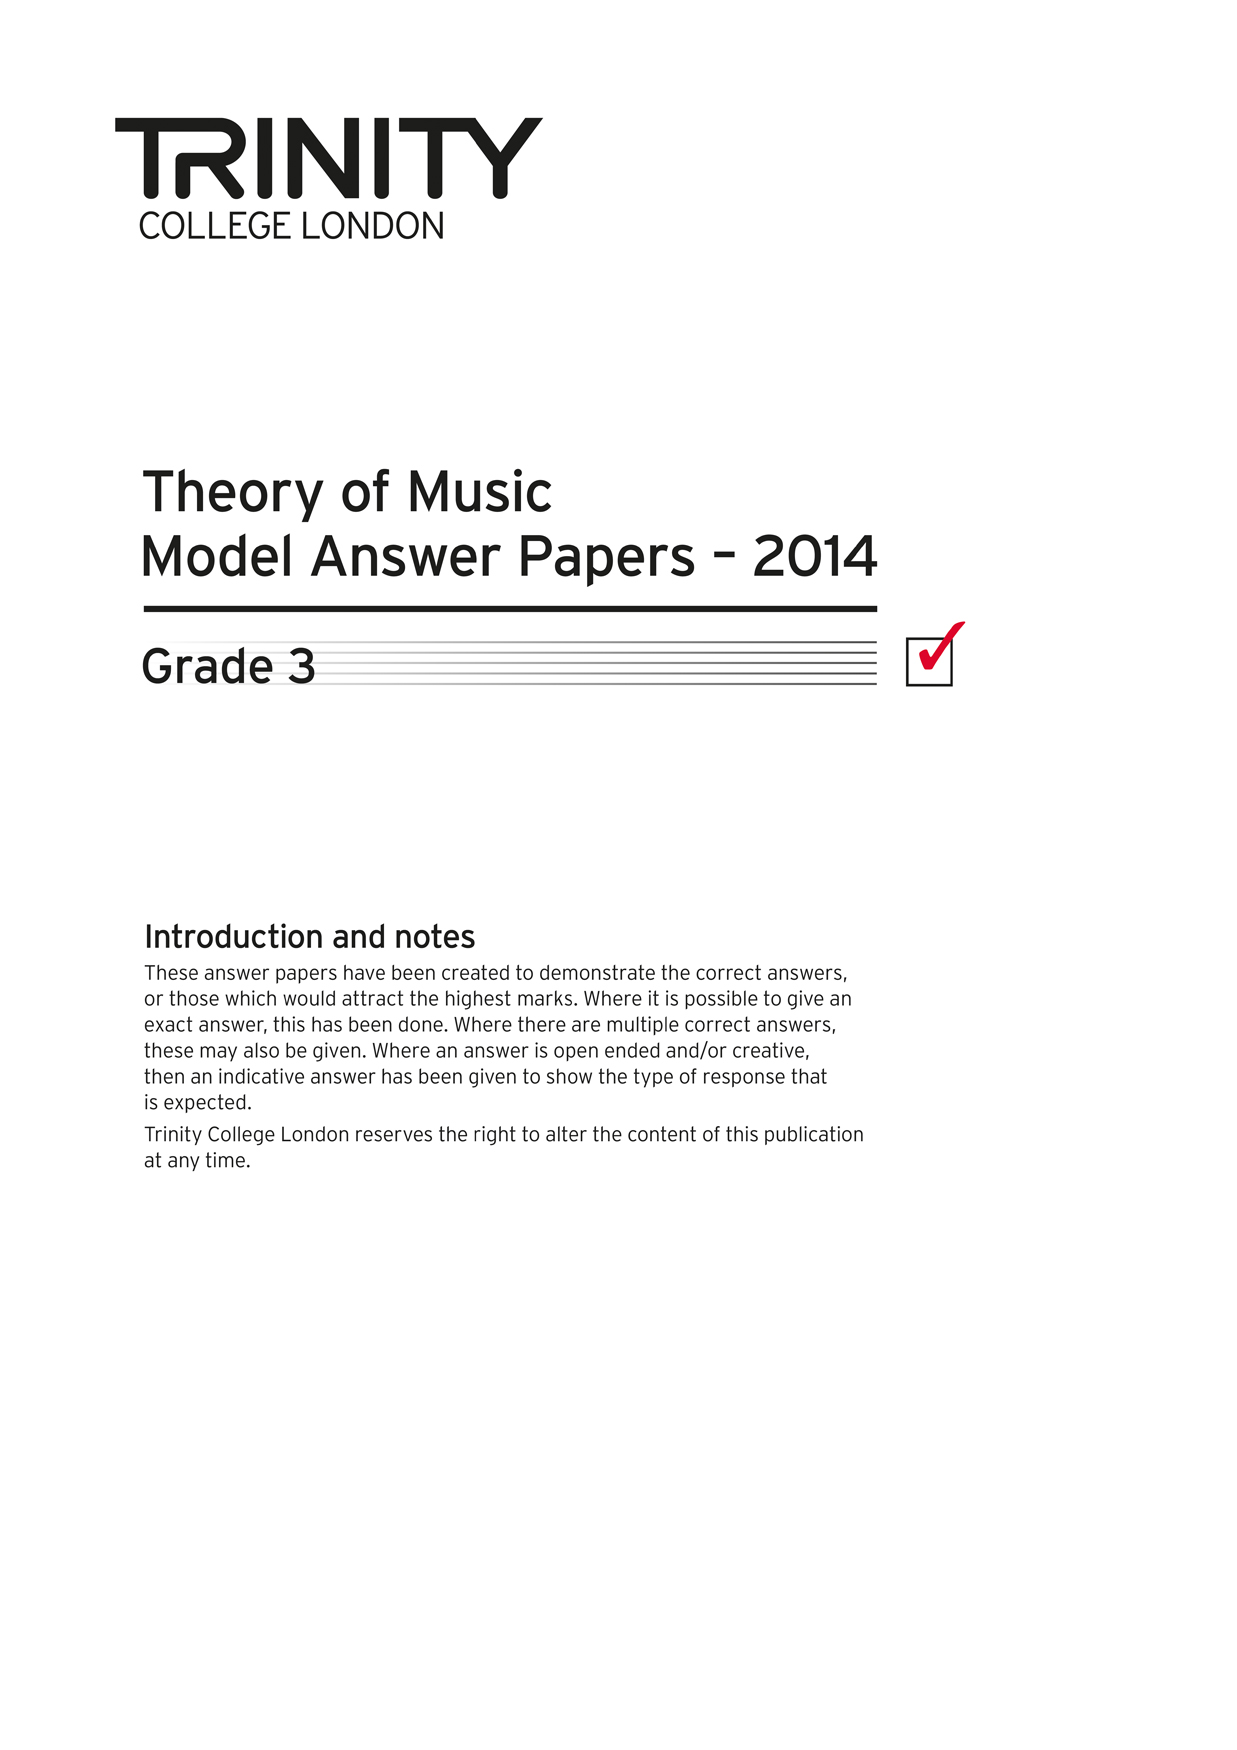 Theory Model Answers 2014 - Grade 3: Theory